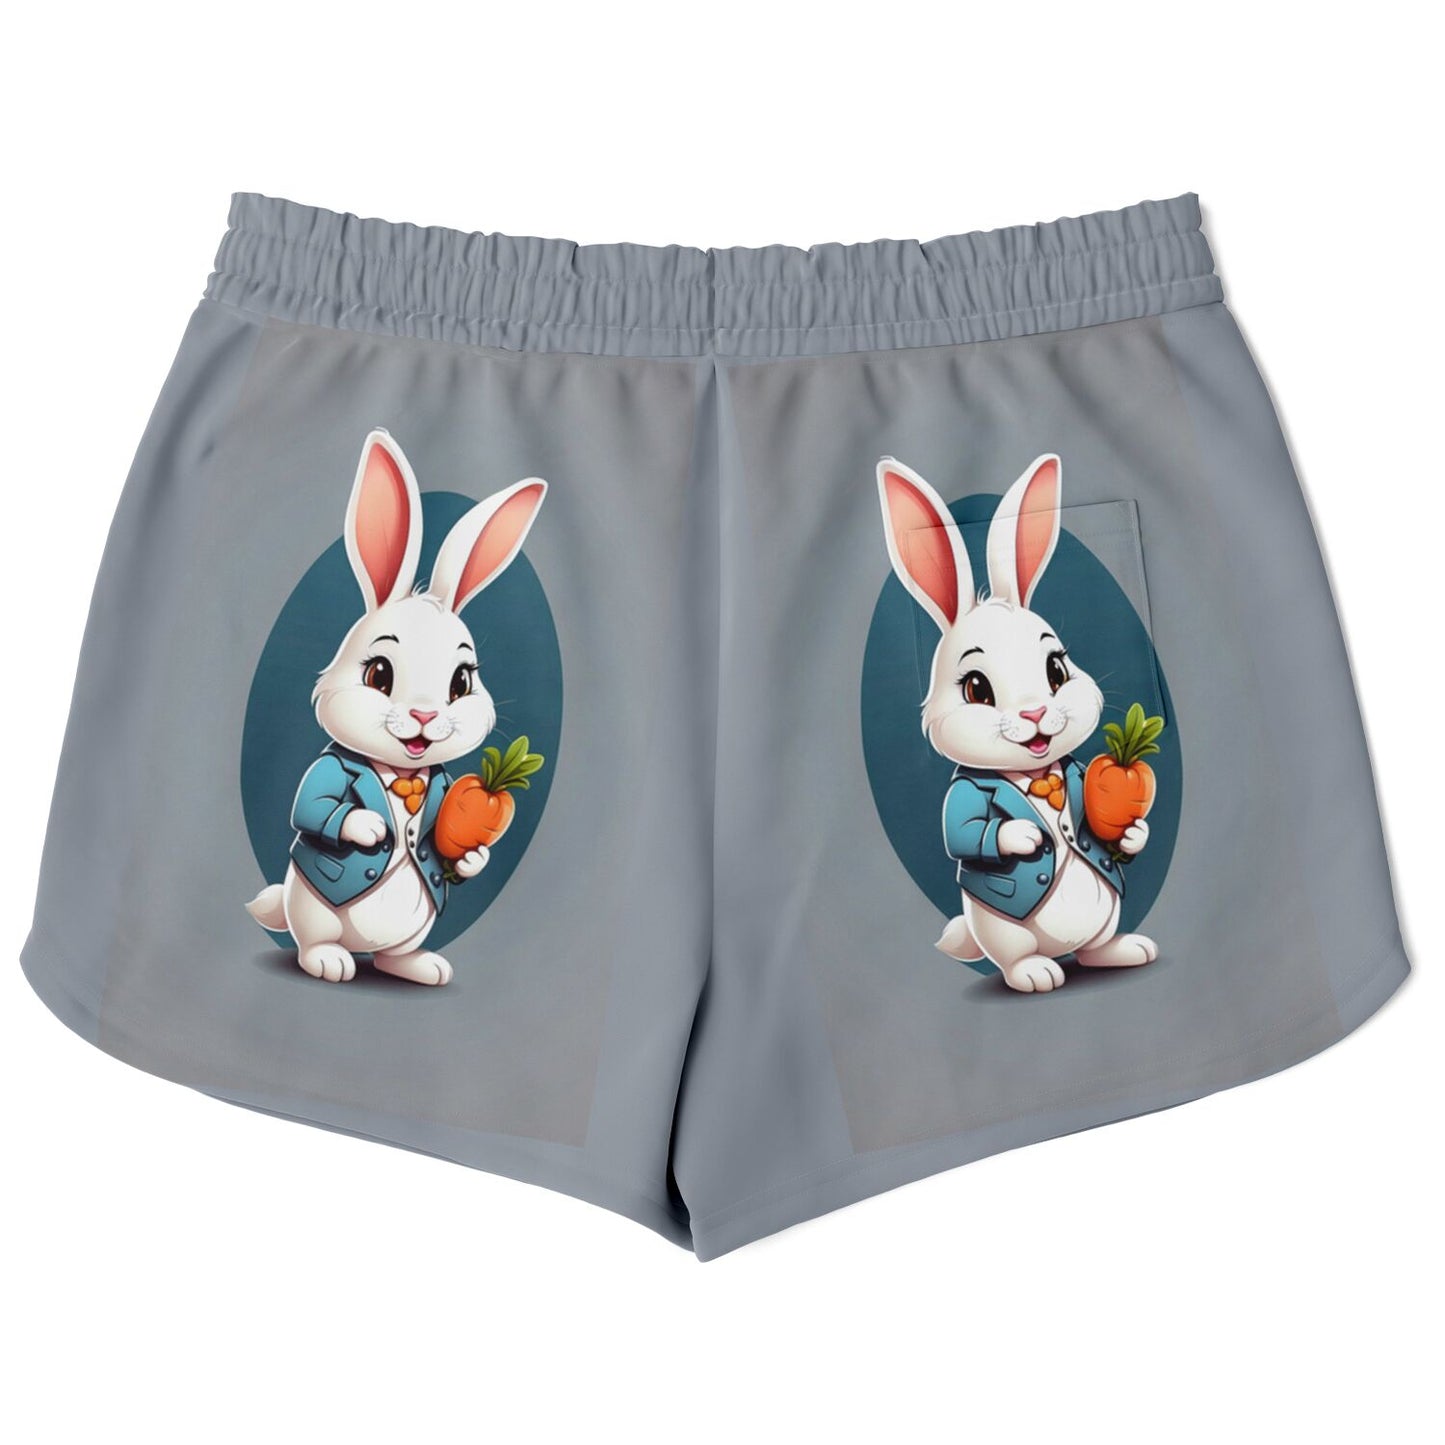 <alt.Bunny Bliss Women's Shorts - Taufaa>